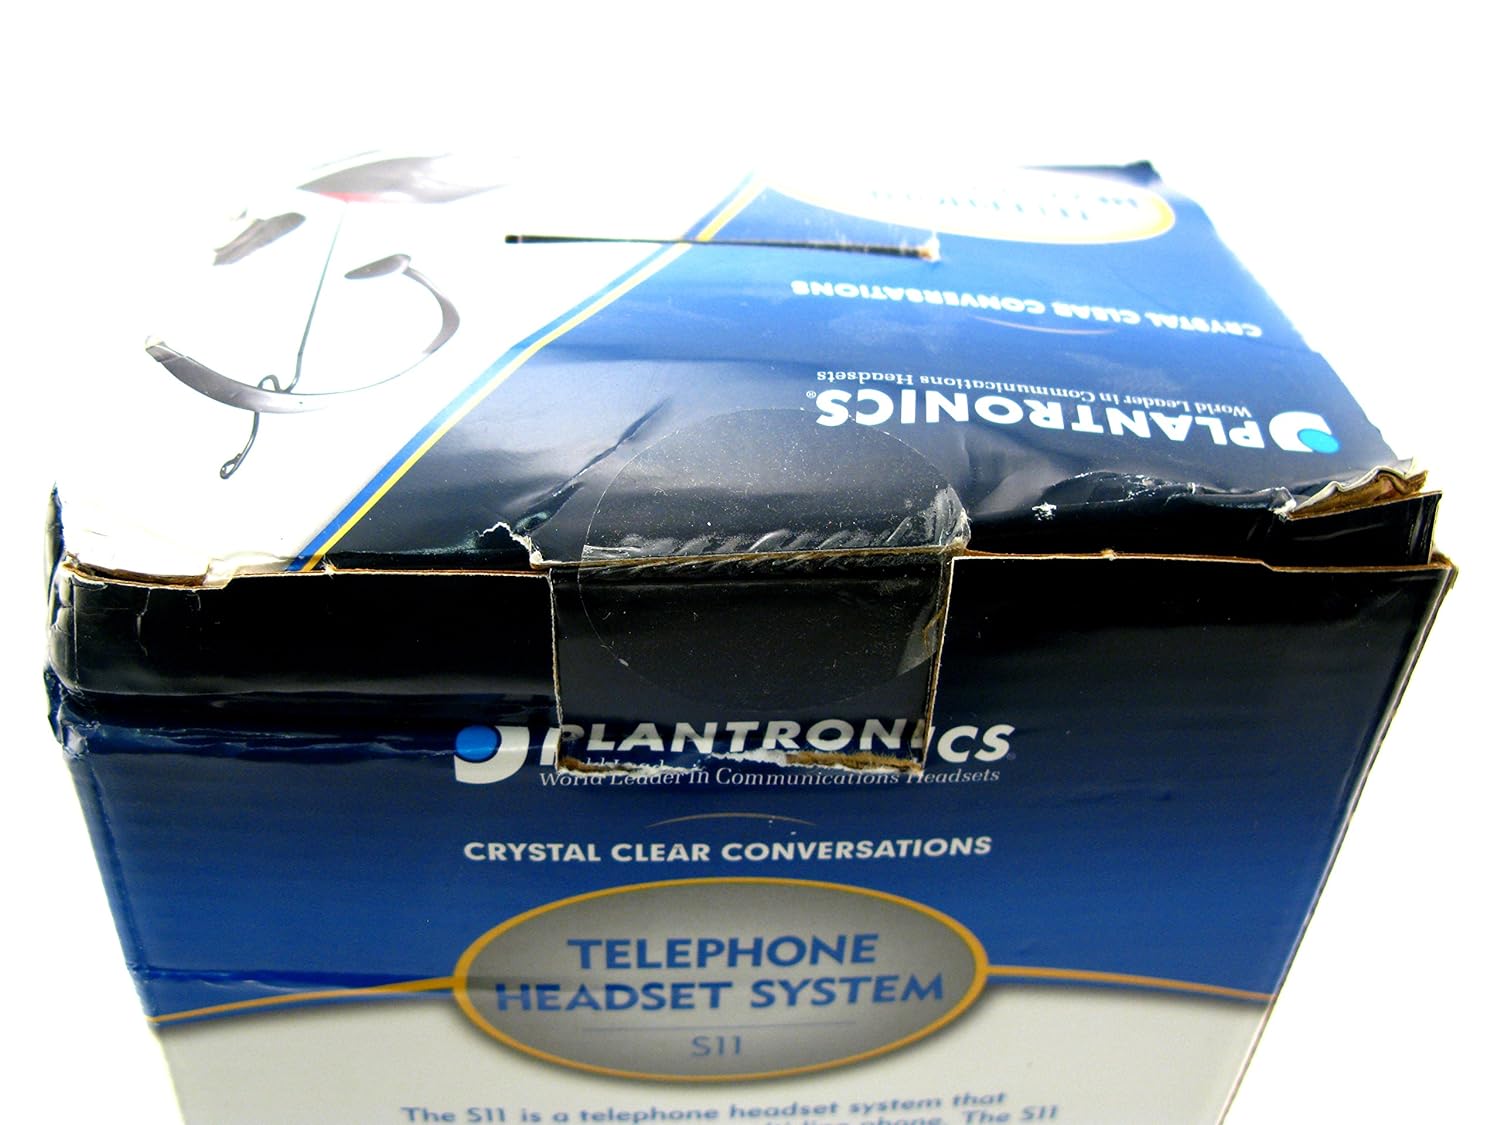 Plantronics S11 Headset System